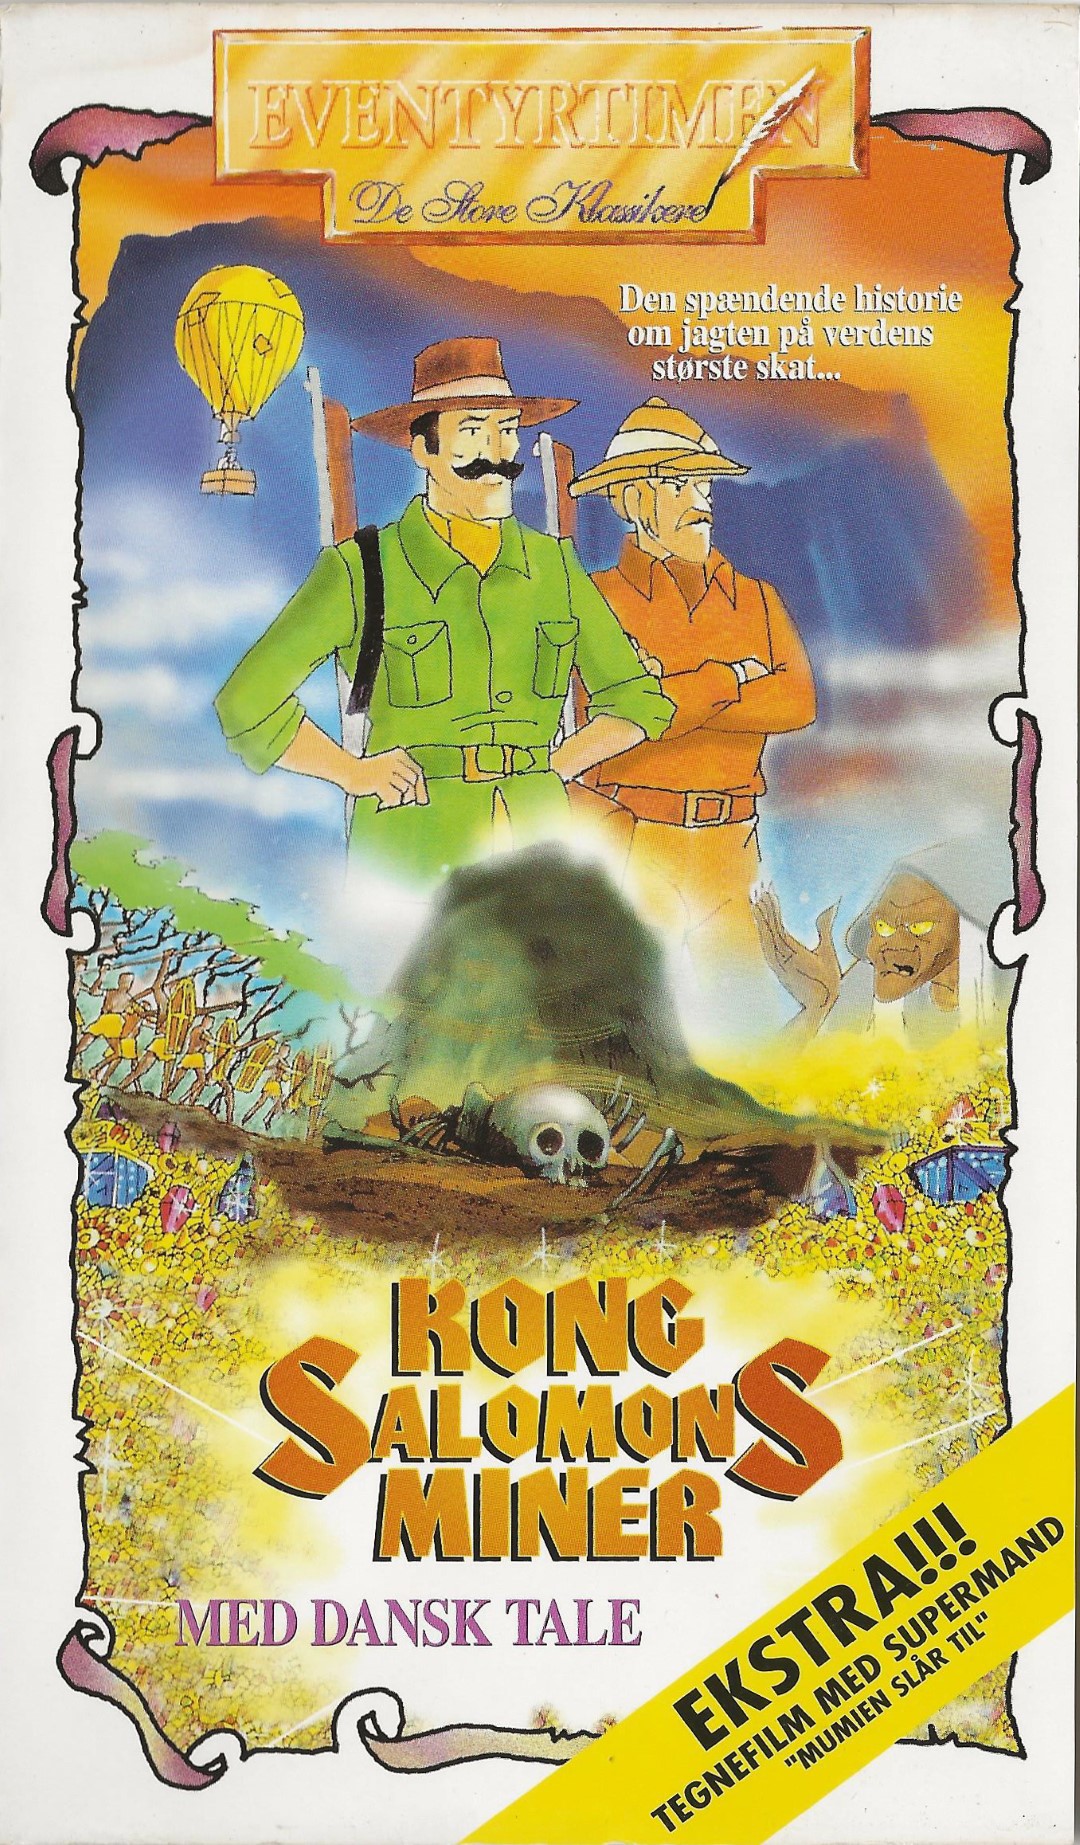 Kong Salomons miner <p>Org.titel: King Salomons Mines</p> VHS Kavan 1986